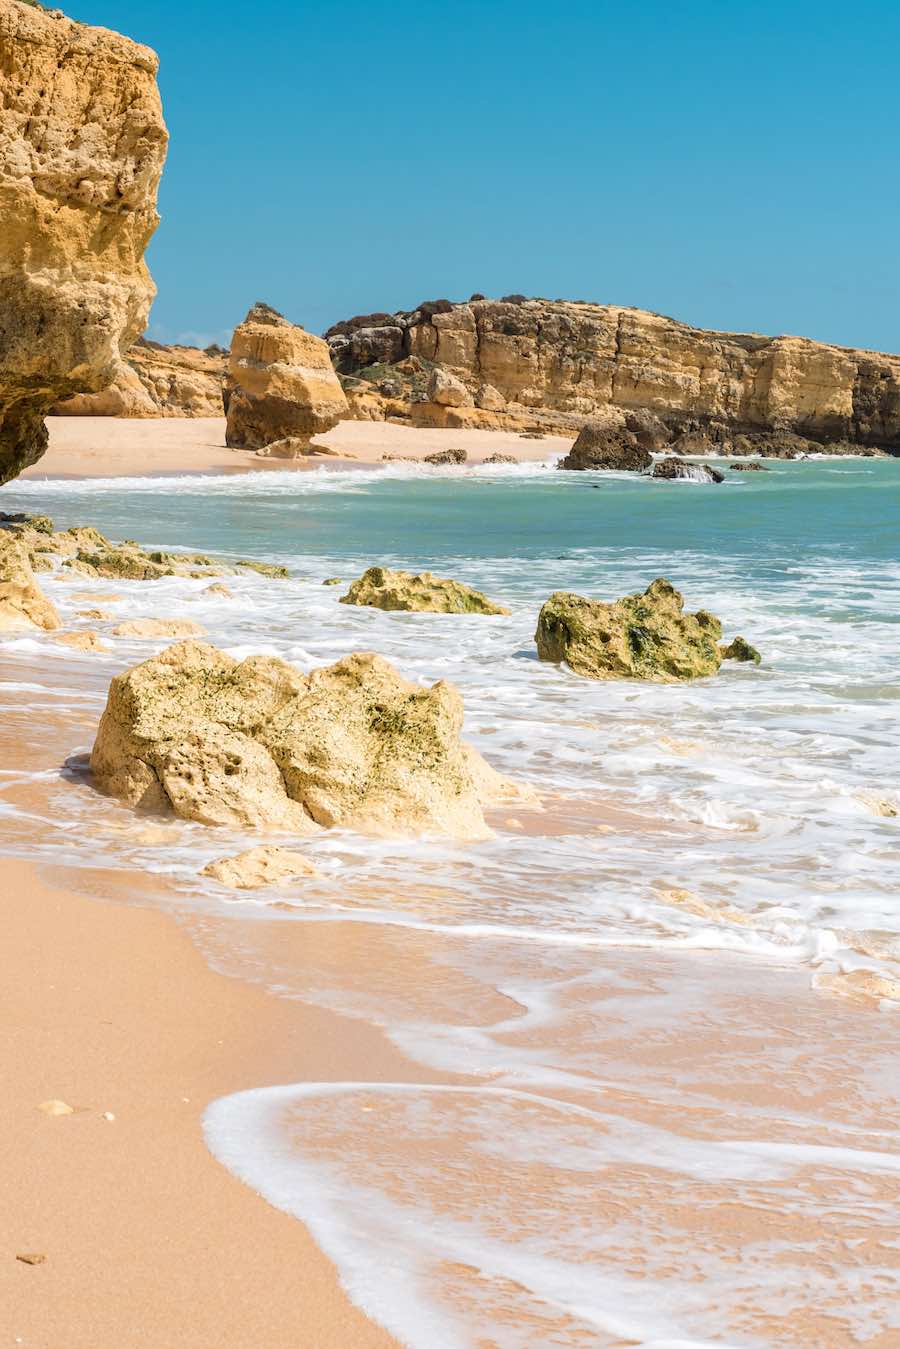 Algarve Urlaub in Portugal Copyright © AdobeStock 204210100 Leszek Czerwonka